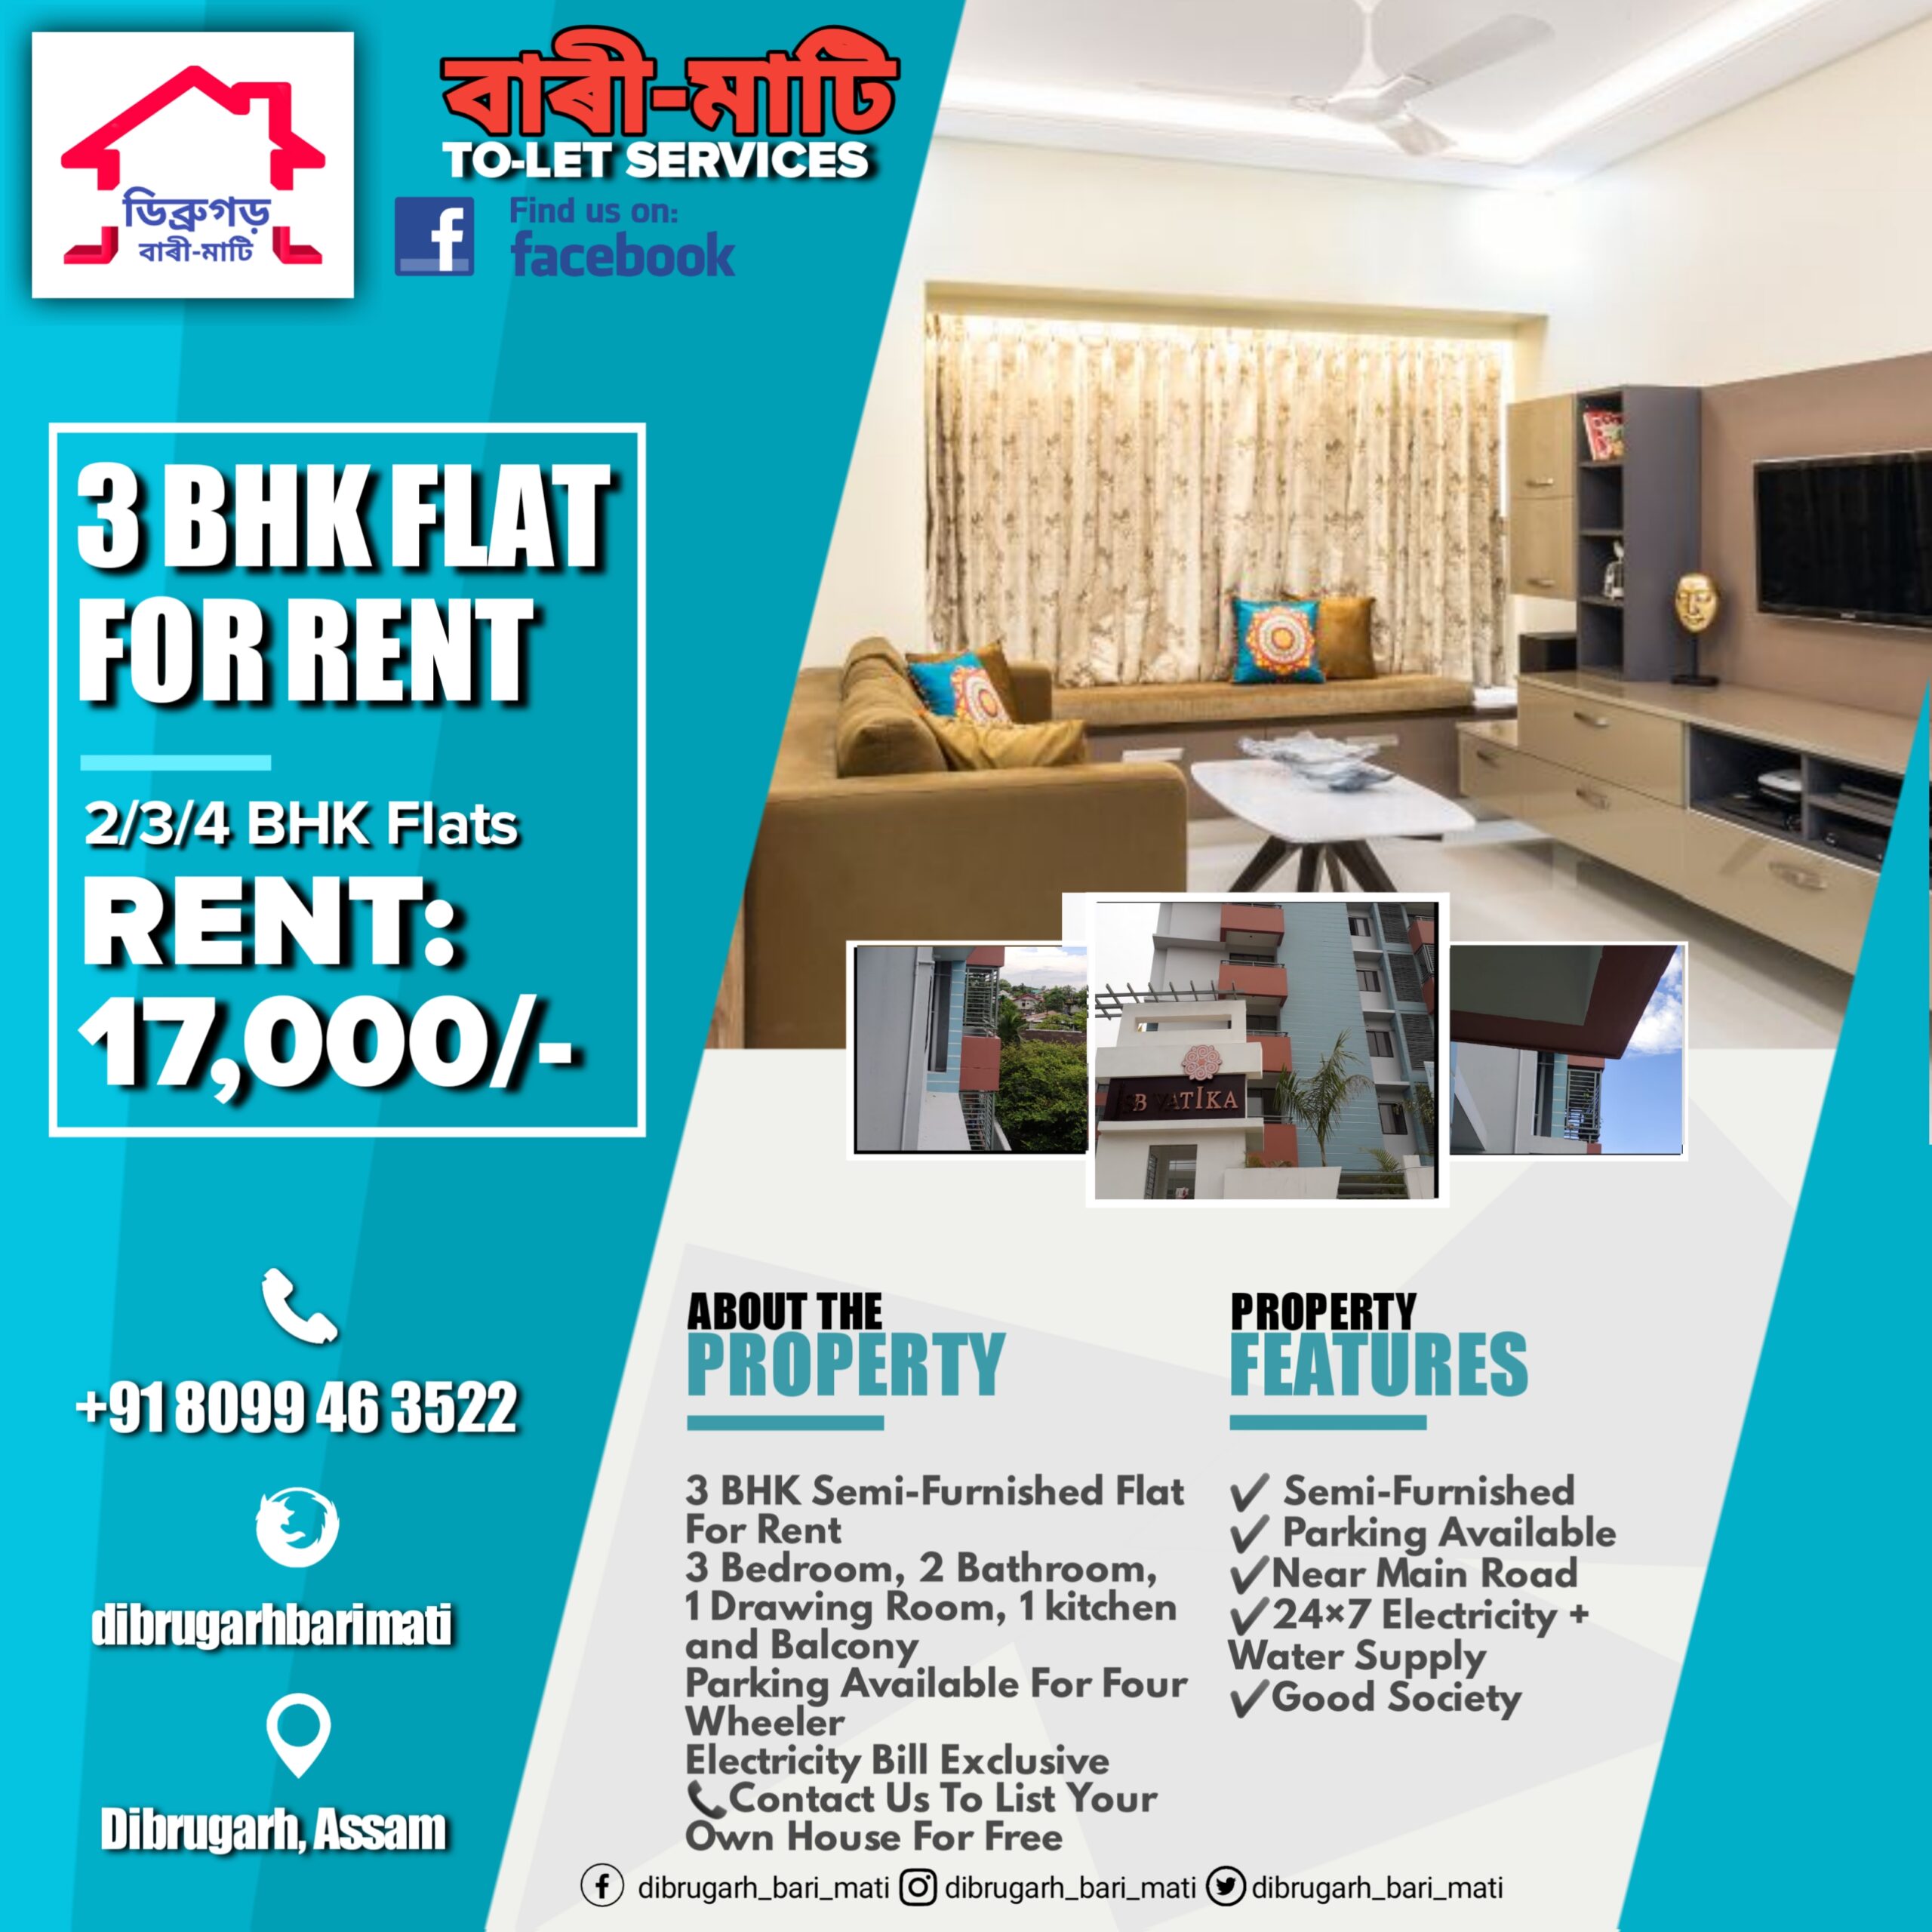 3 BHK flat rent ini Dibrugarh at Milan Nagar under 15k